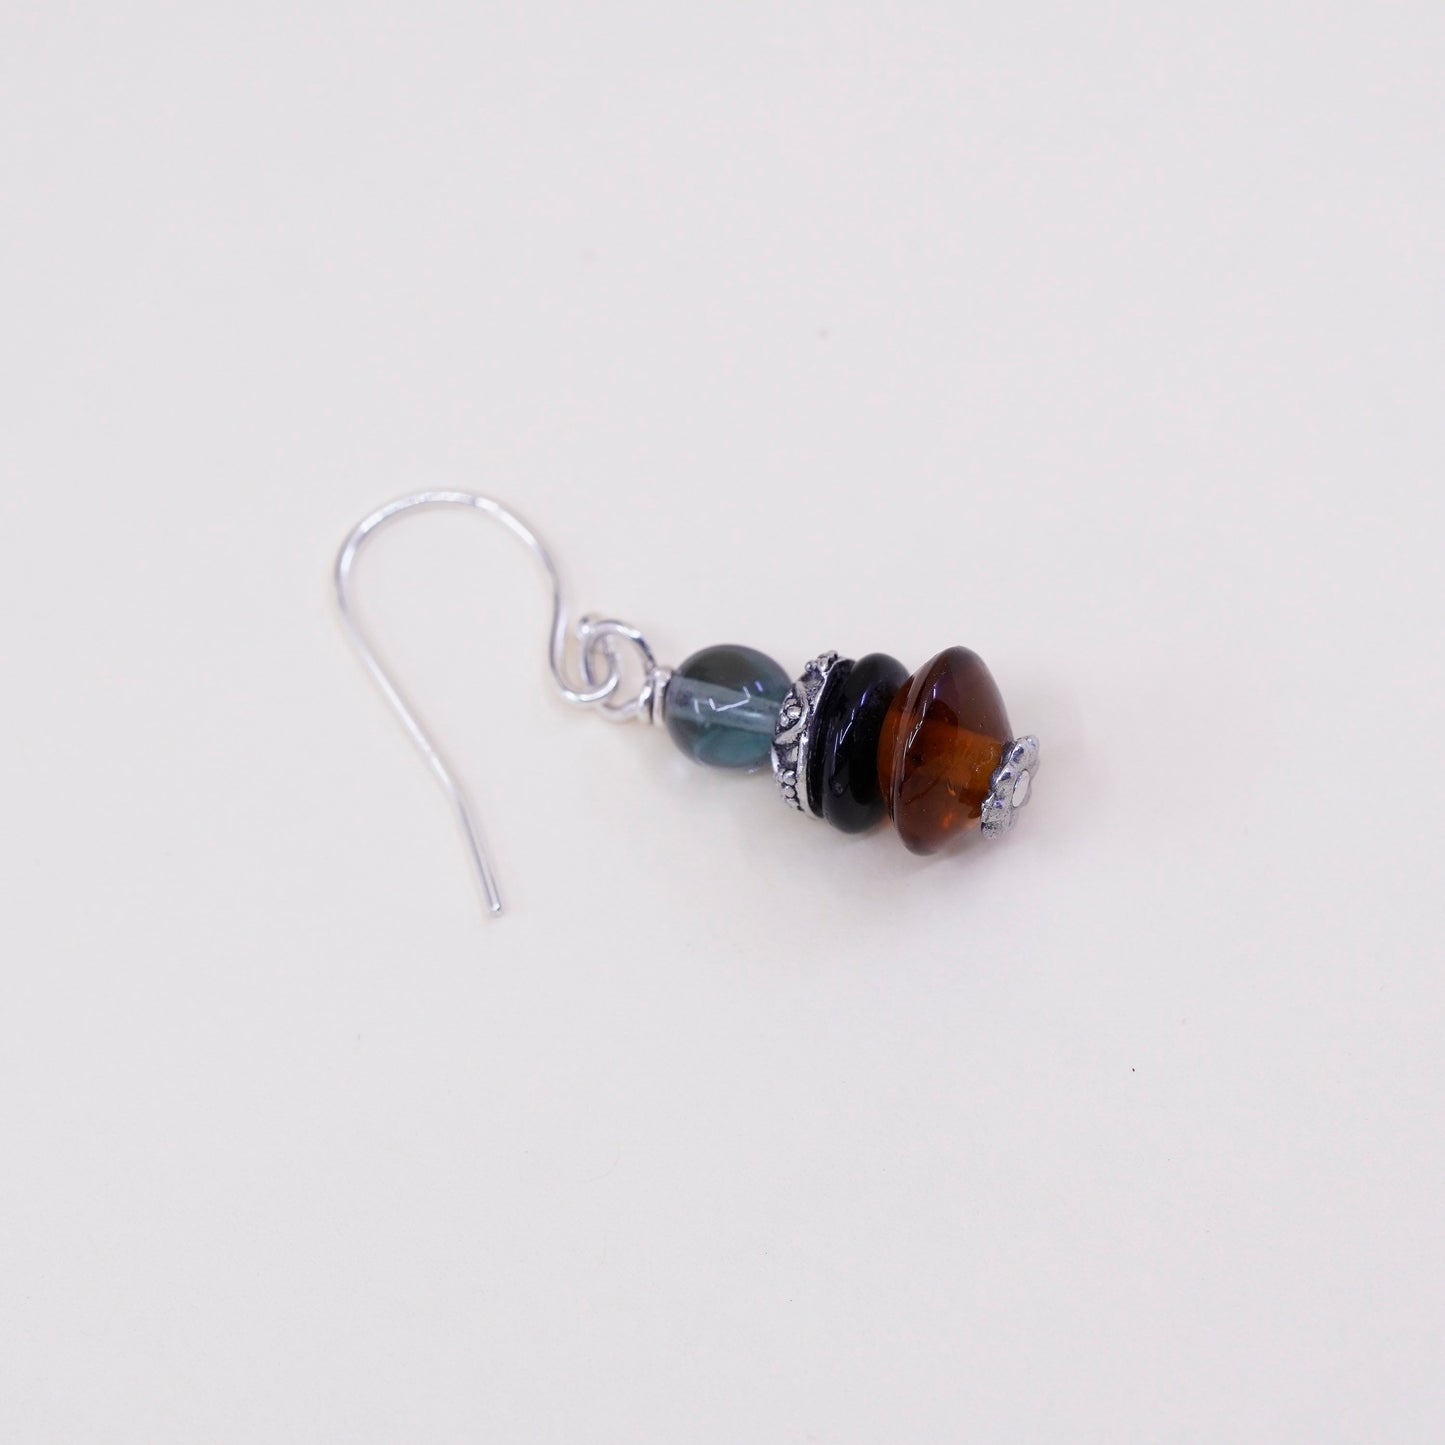 Vintage Sterling silver handmade earrings, 925 hook with amber obsidian beads